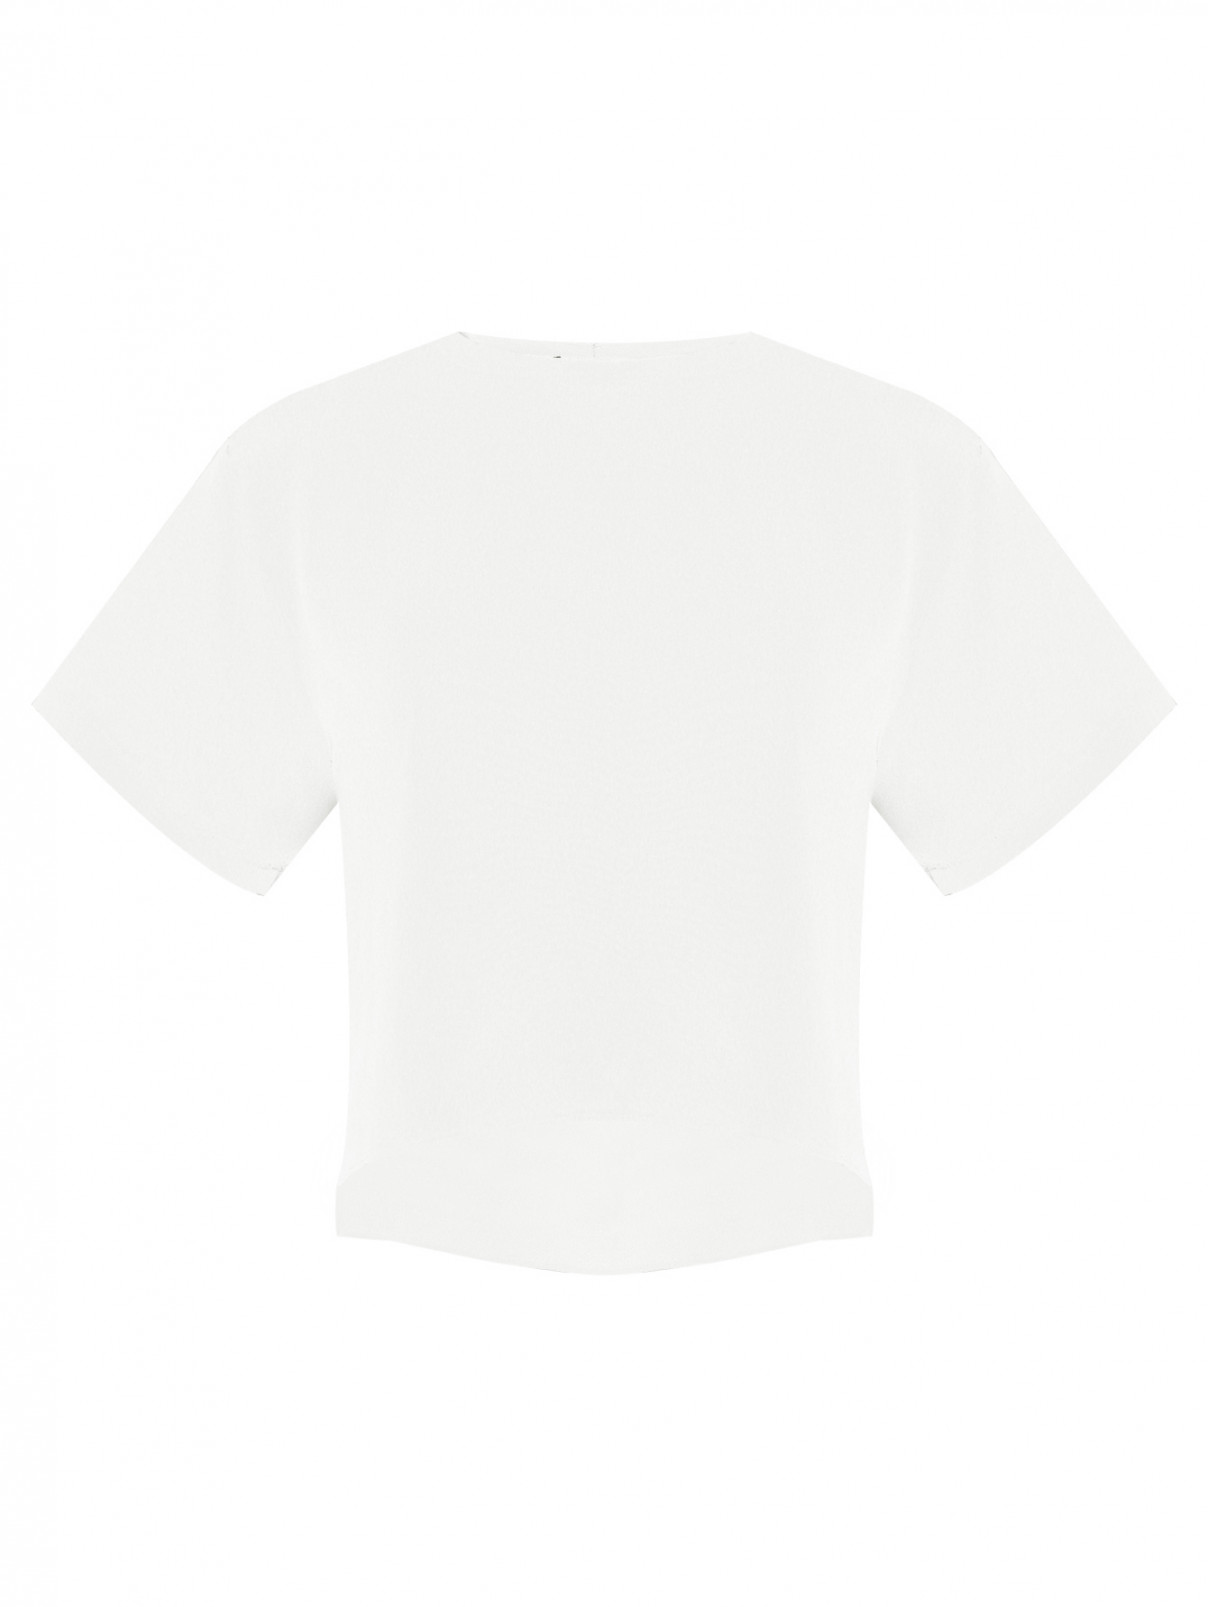 Блуза с короткими рукавами Max&Co  –  Общий вид  – Цвет:  Белый